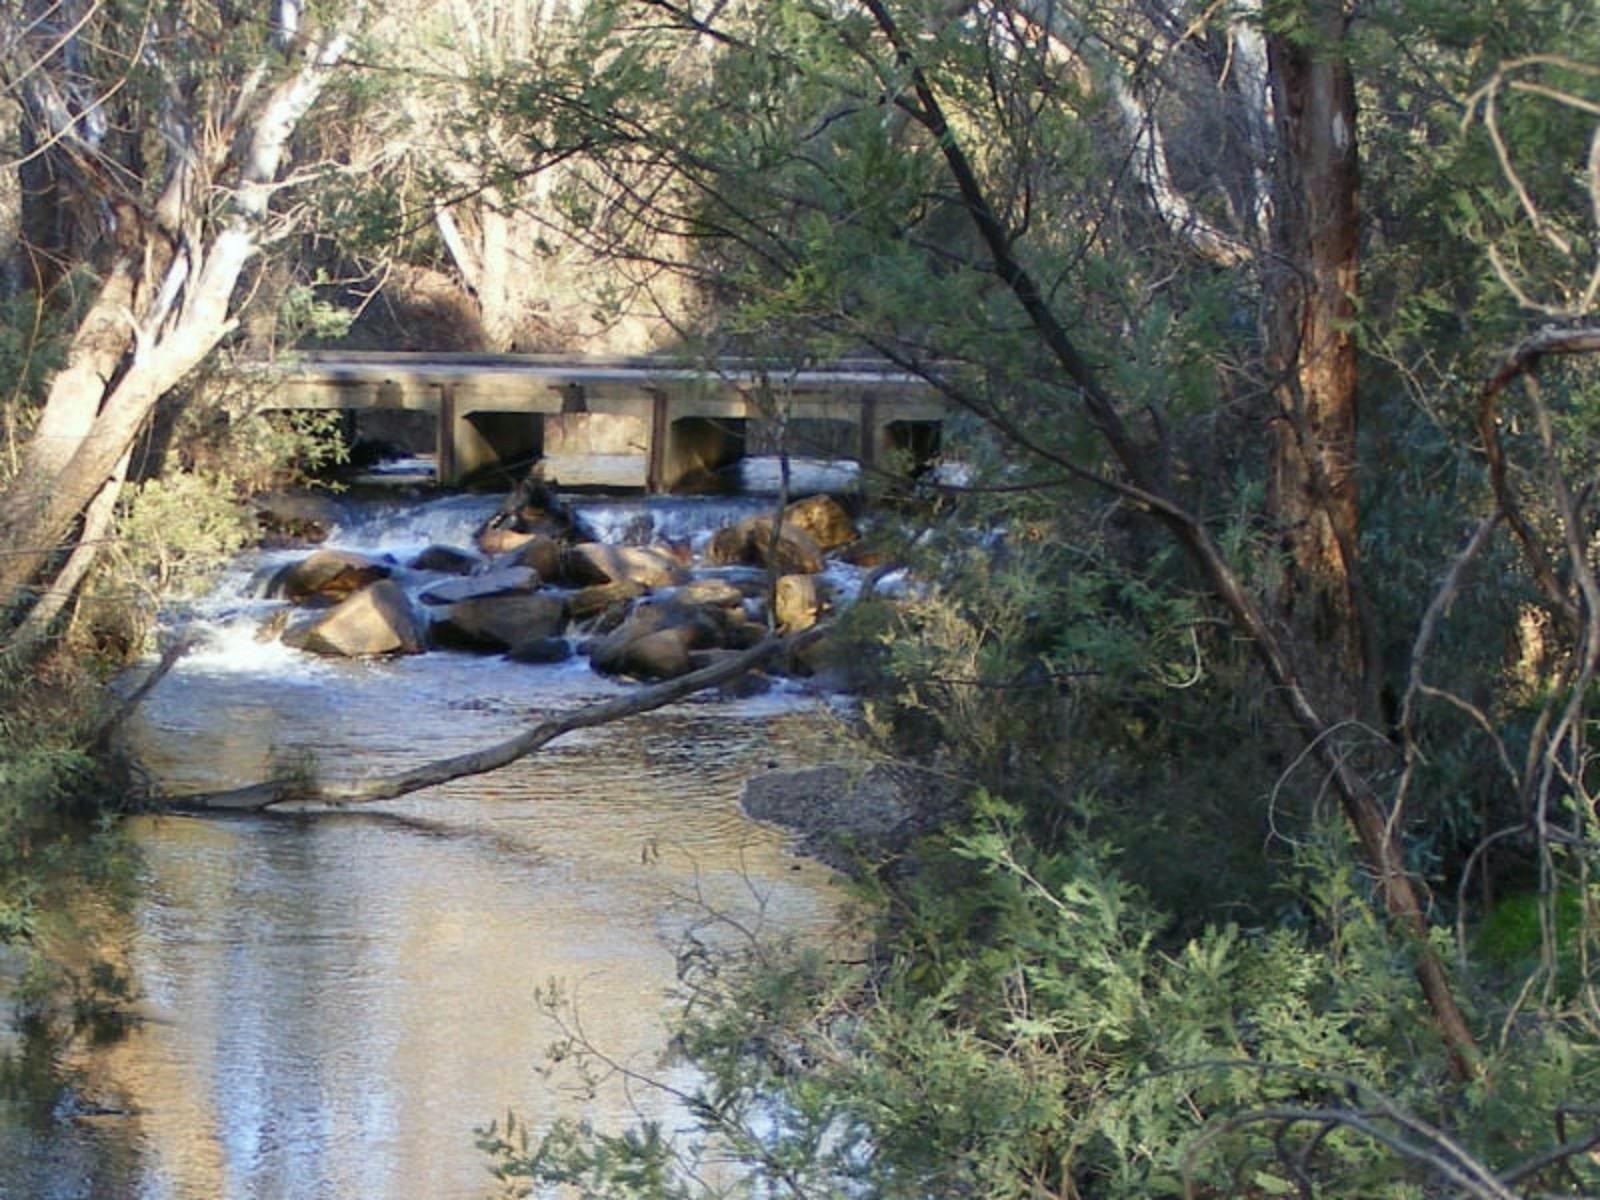 Bridge, water flowing underneath through rocks, trees, sunny day.